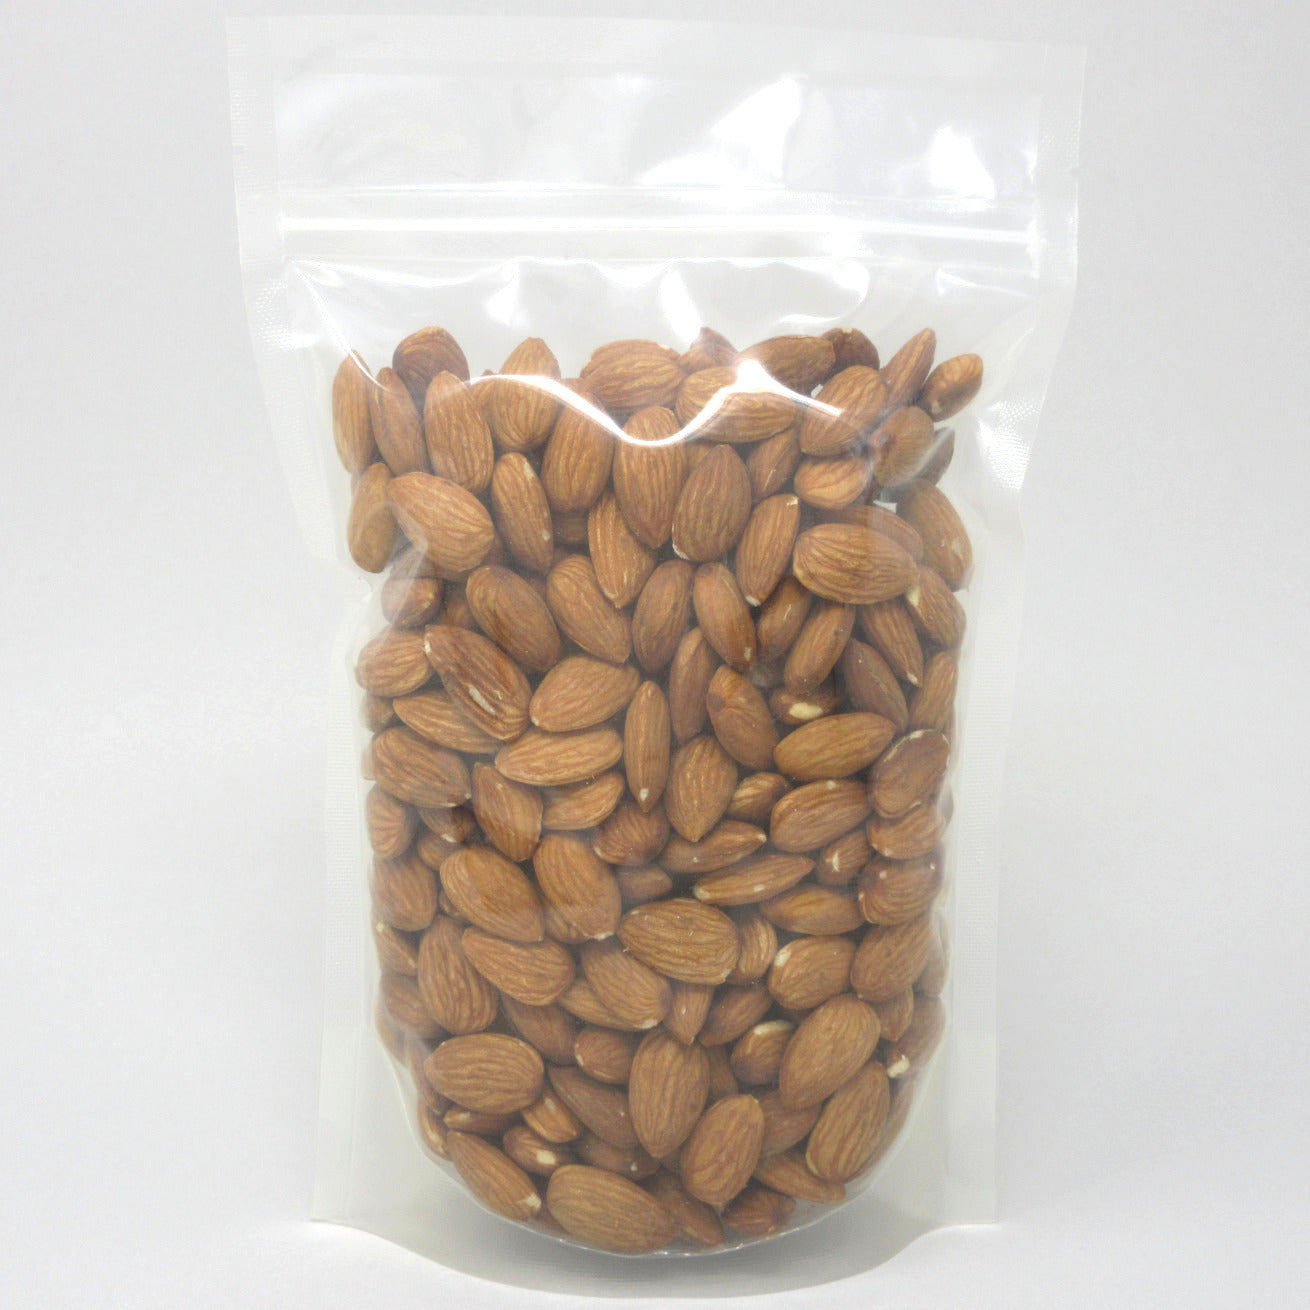 Flour Barrel product image - Almonds